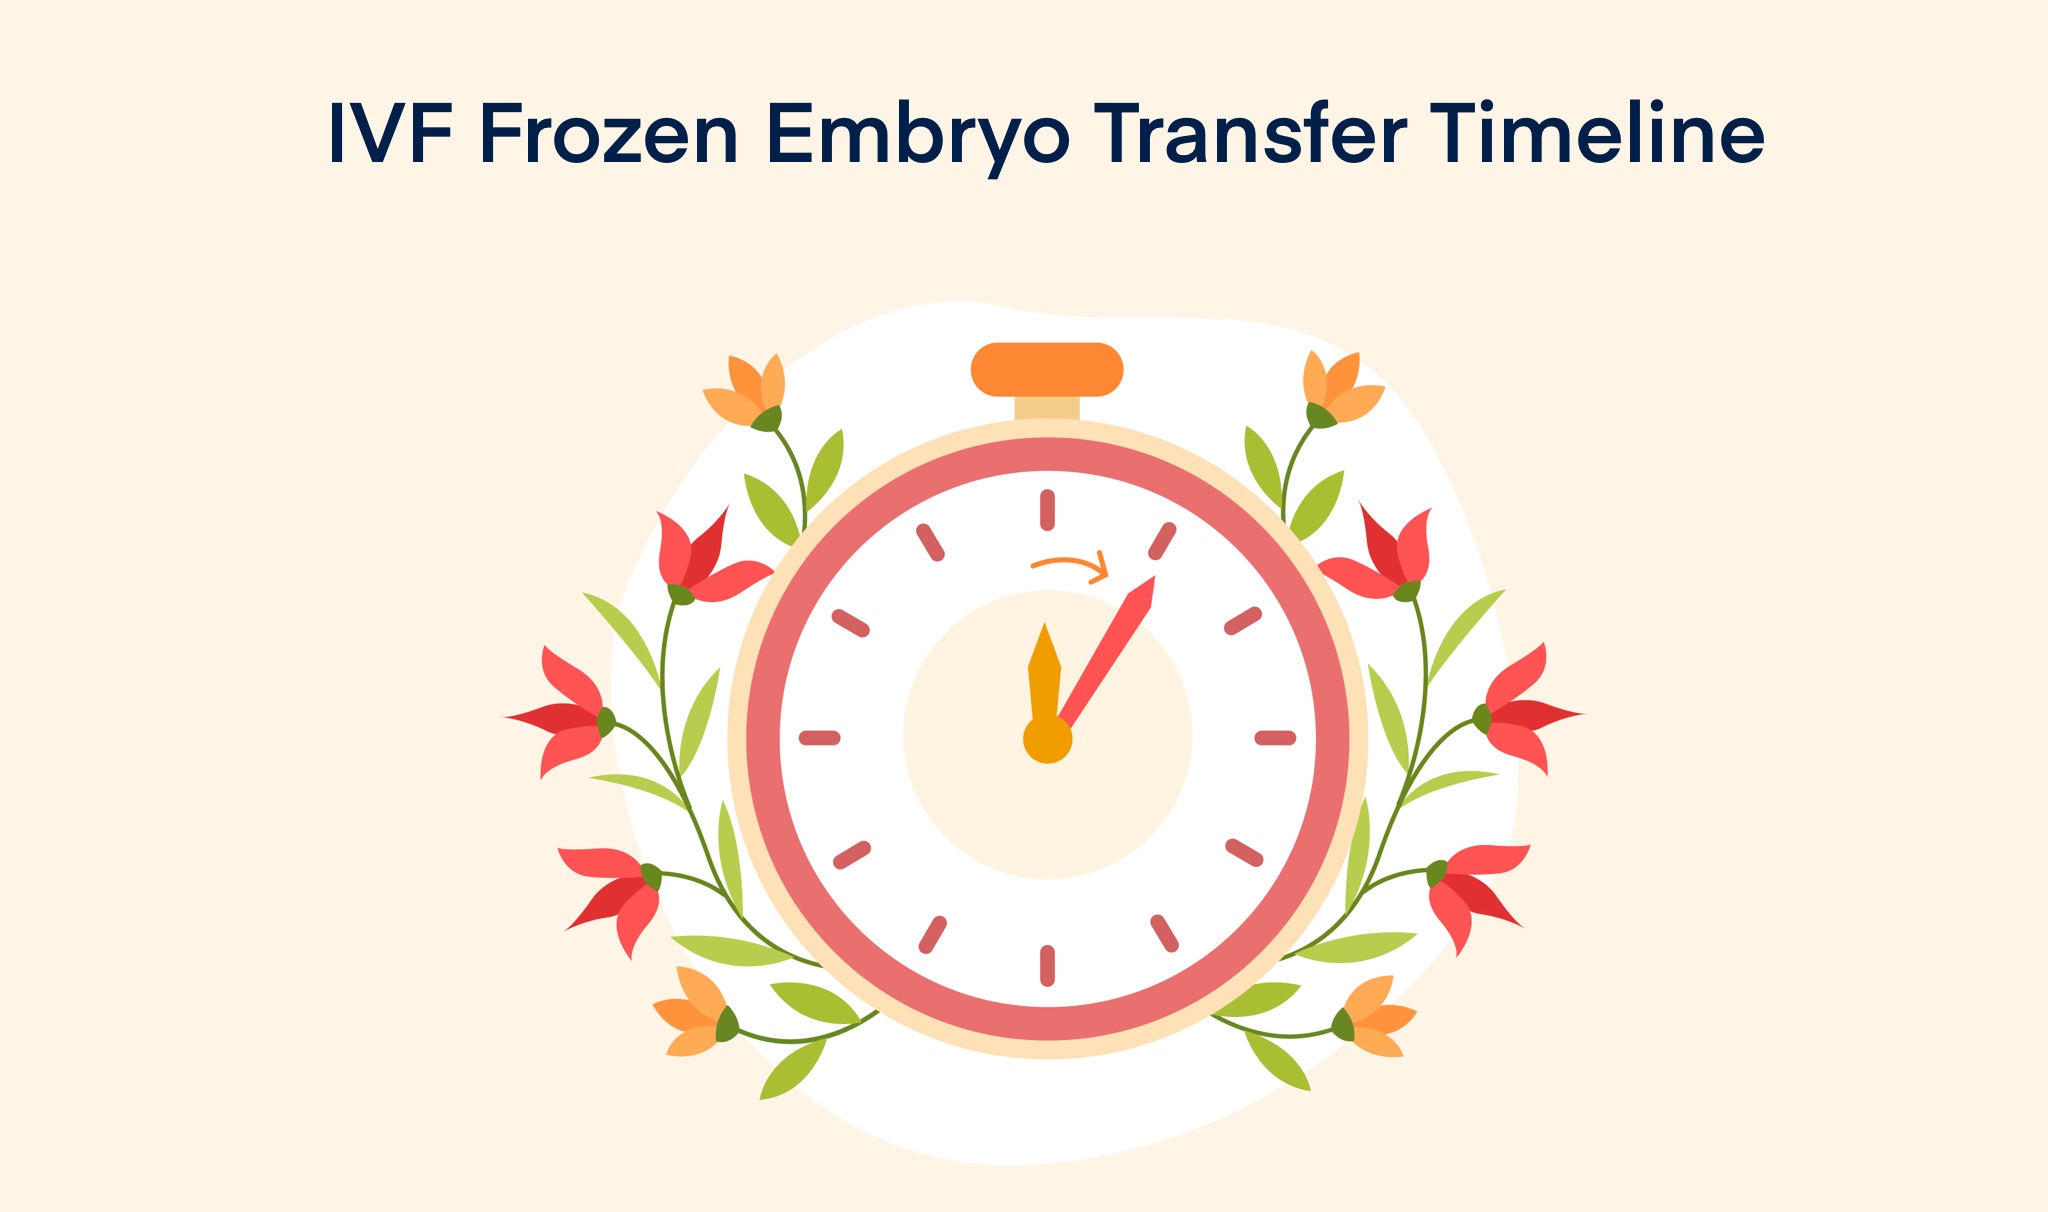 IVF Frozen Embryo Transfer Timeline, Process, Pregnancy Test